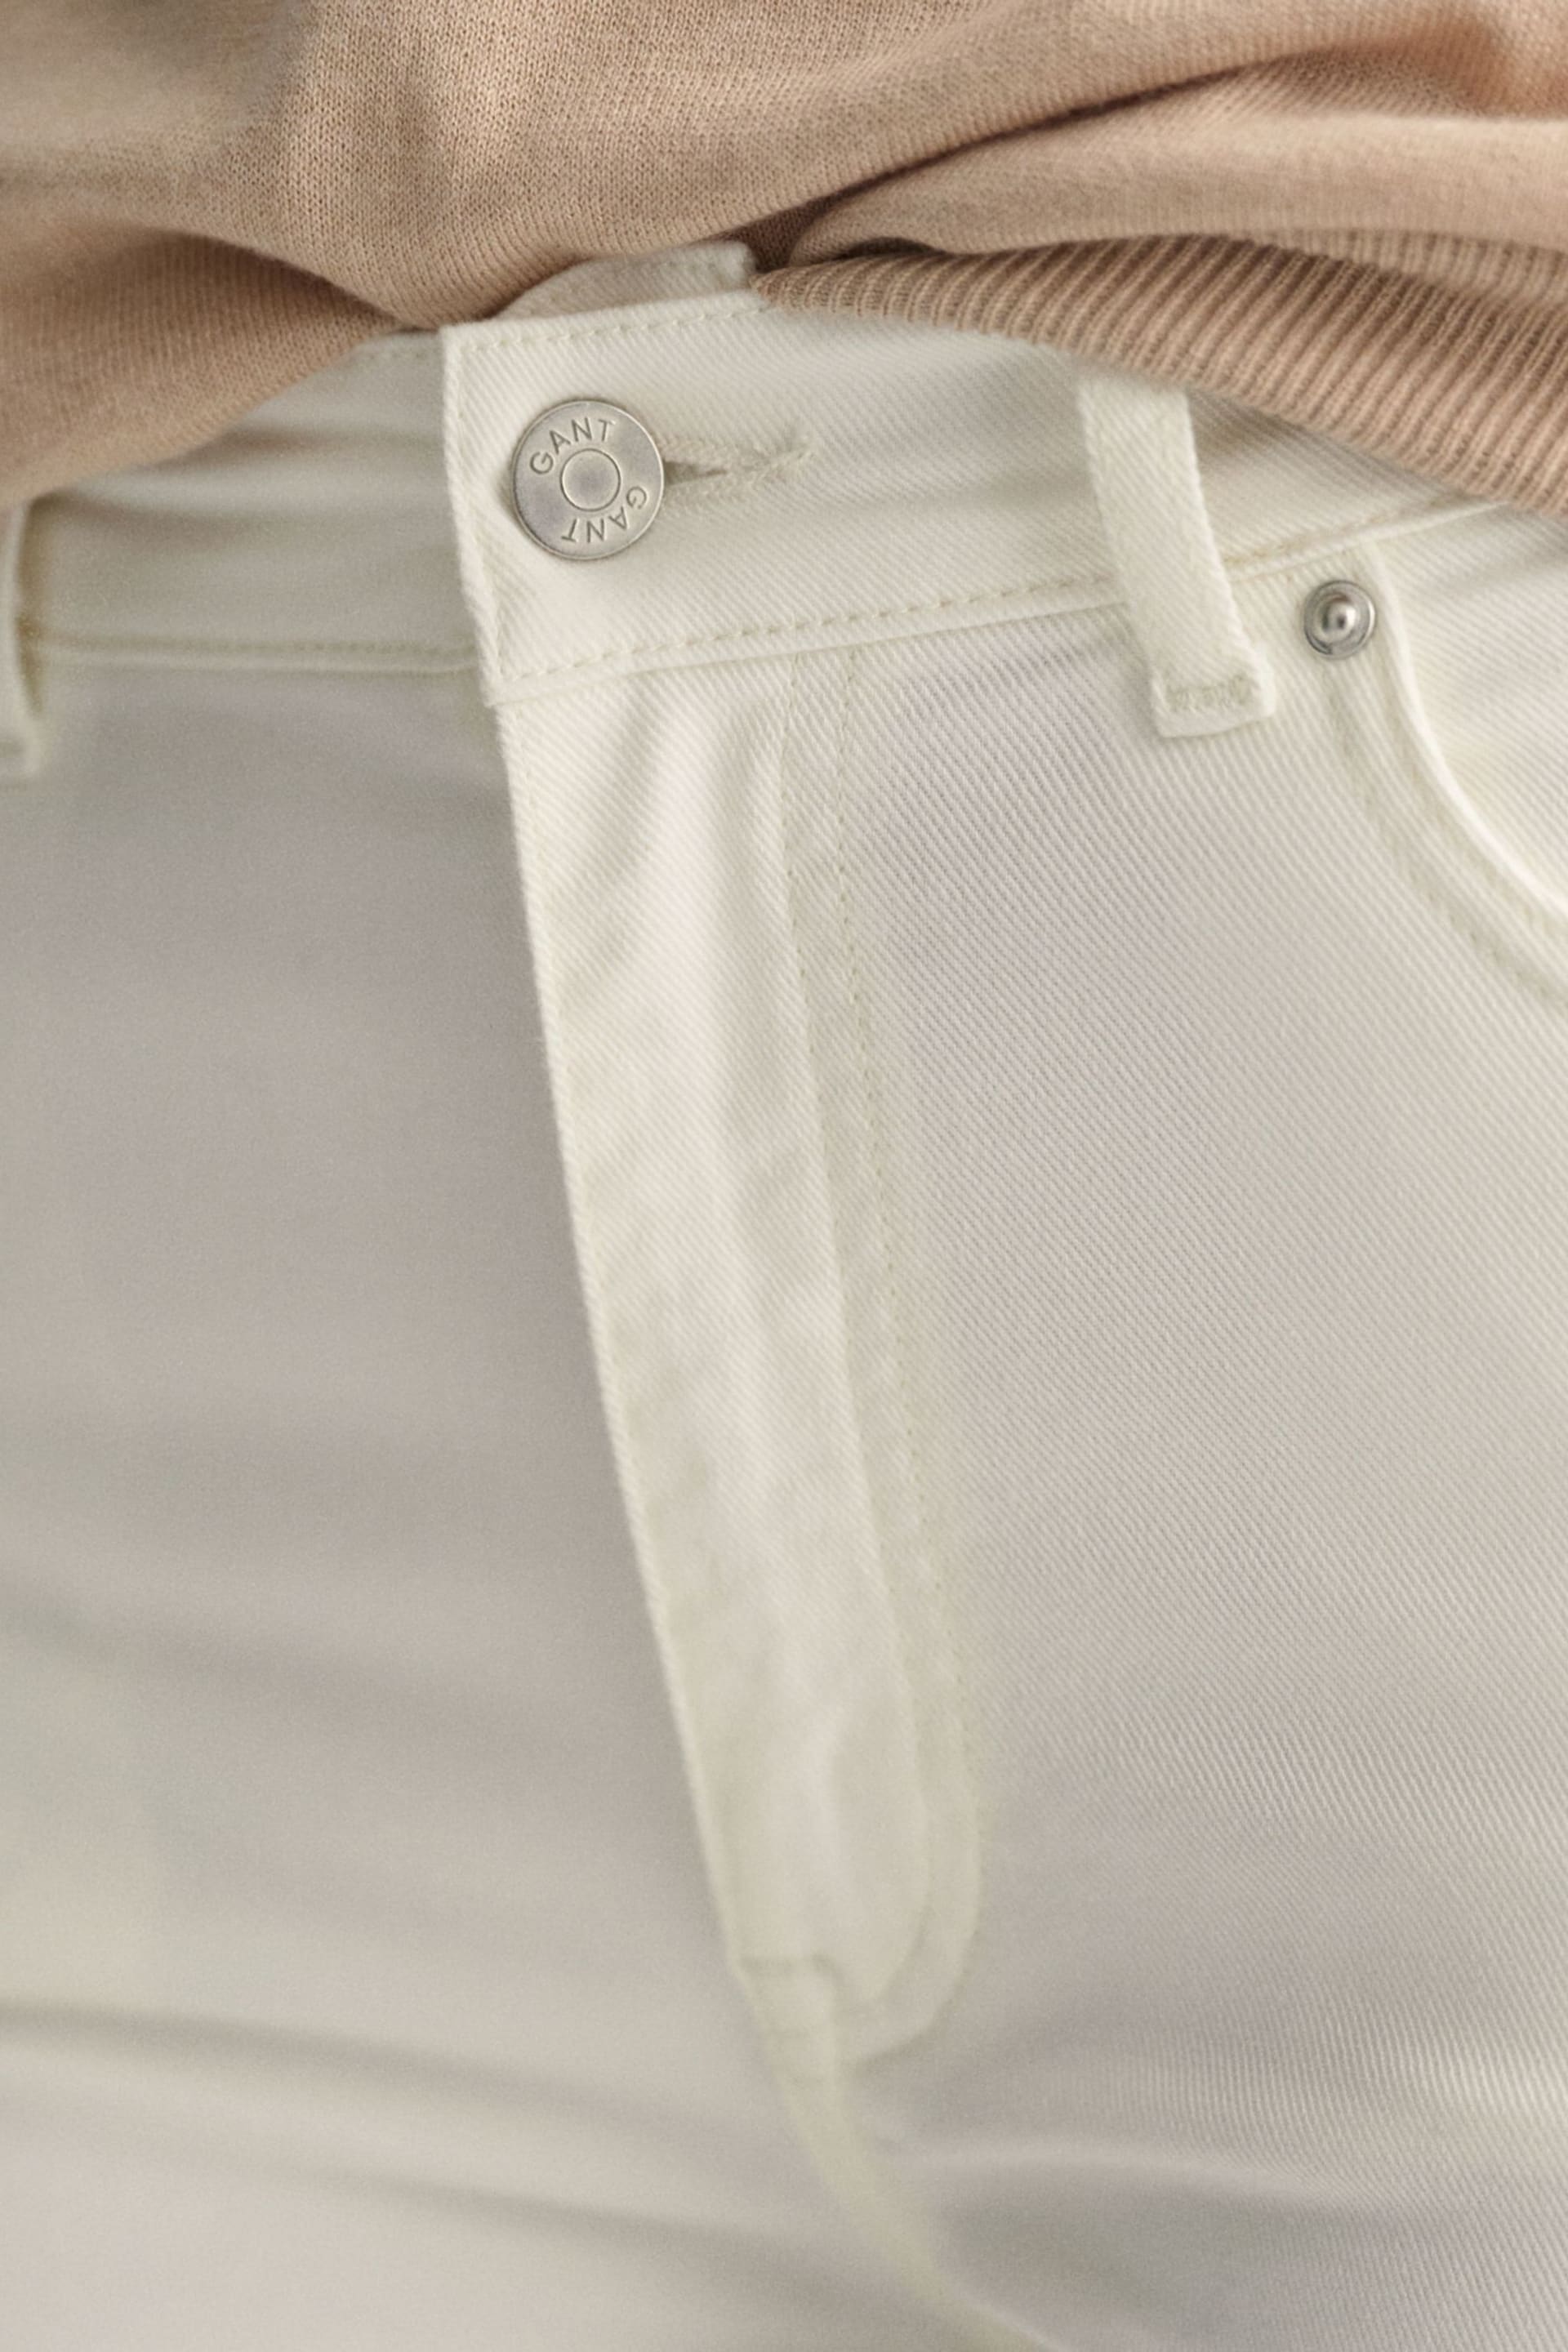 GANT White Slim Fit Ankle Grazer Jeans - Image 6 of 9